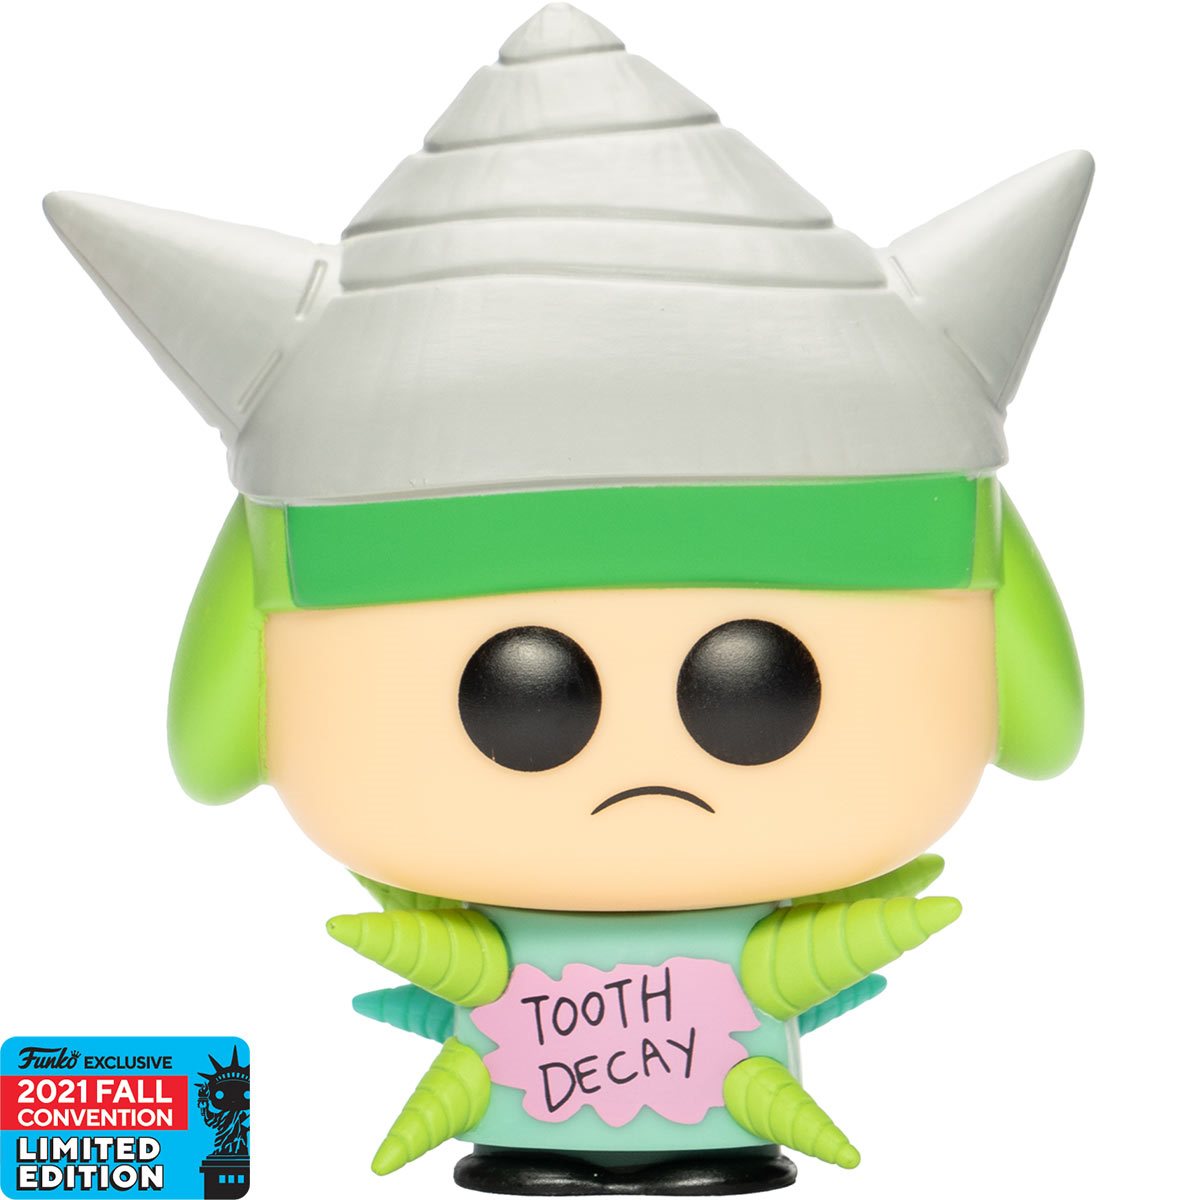 South Park Tooth Decay Kyle 2021 Exclusive Funko Pop! Vinyl figure